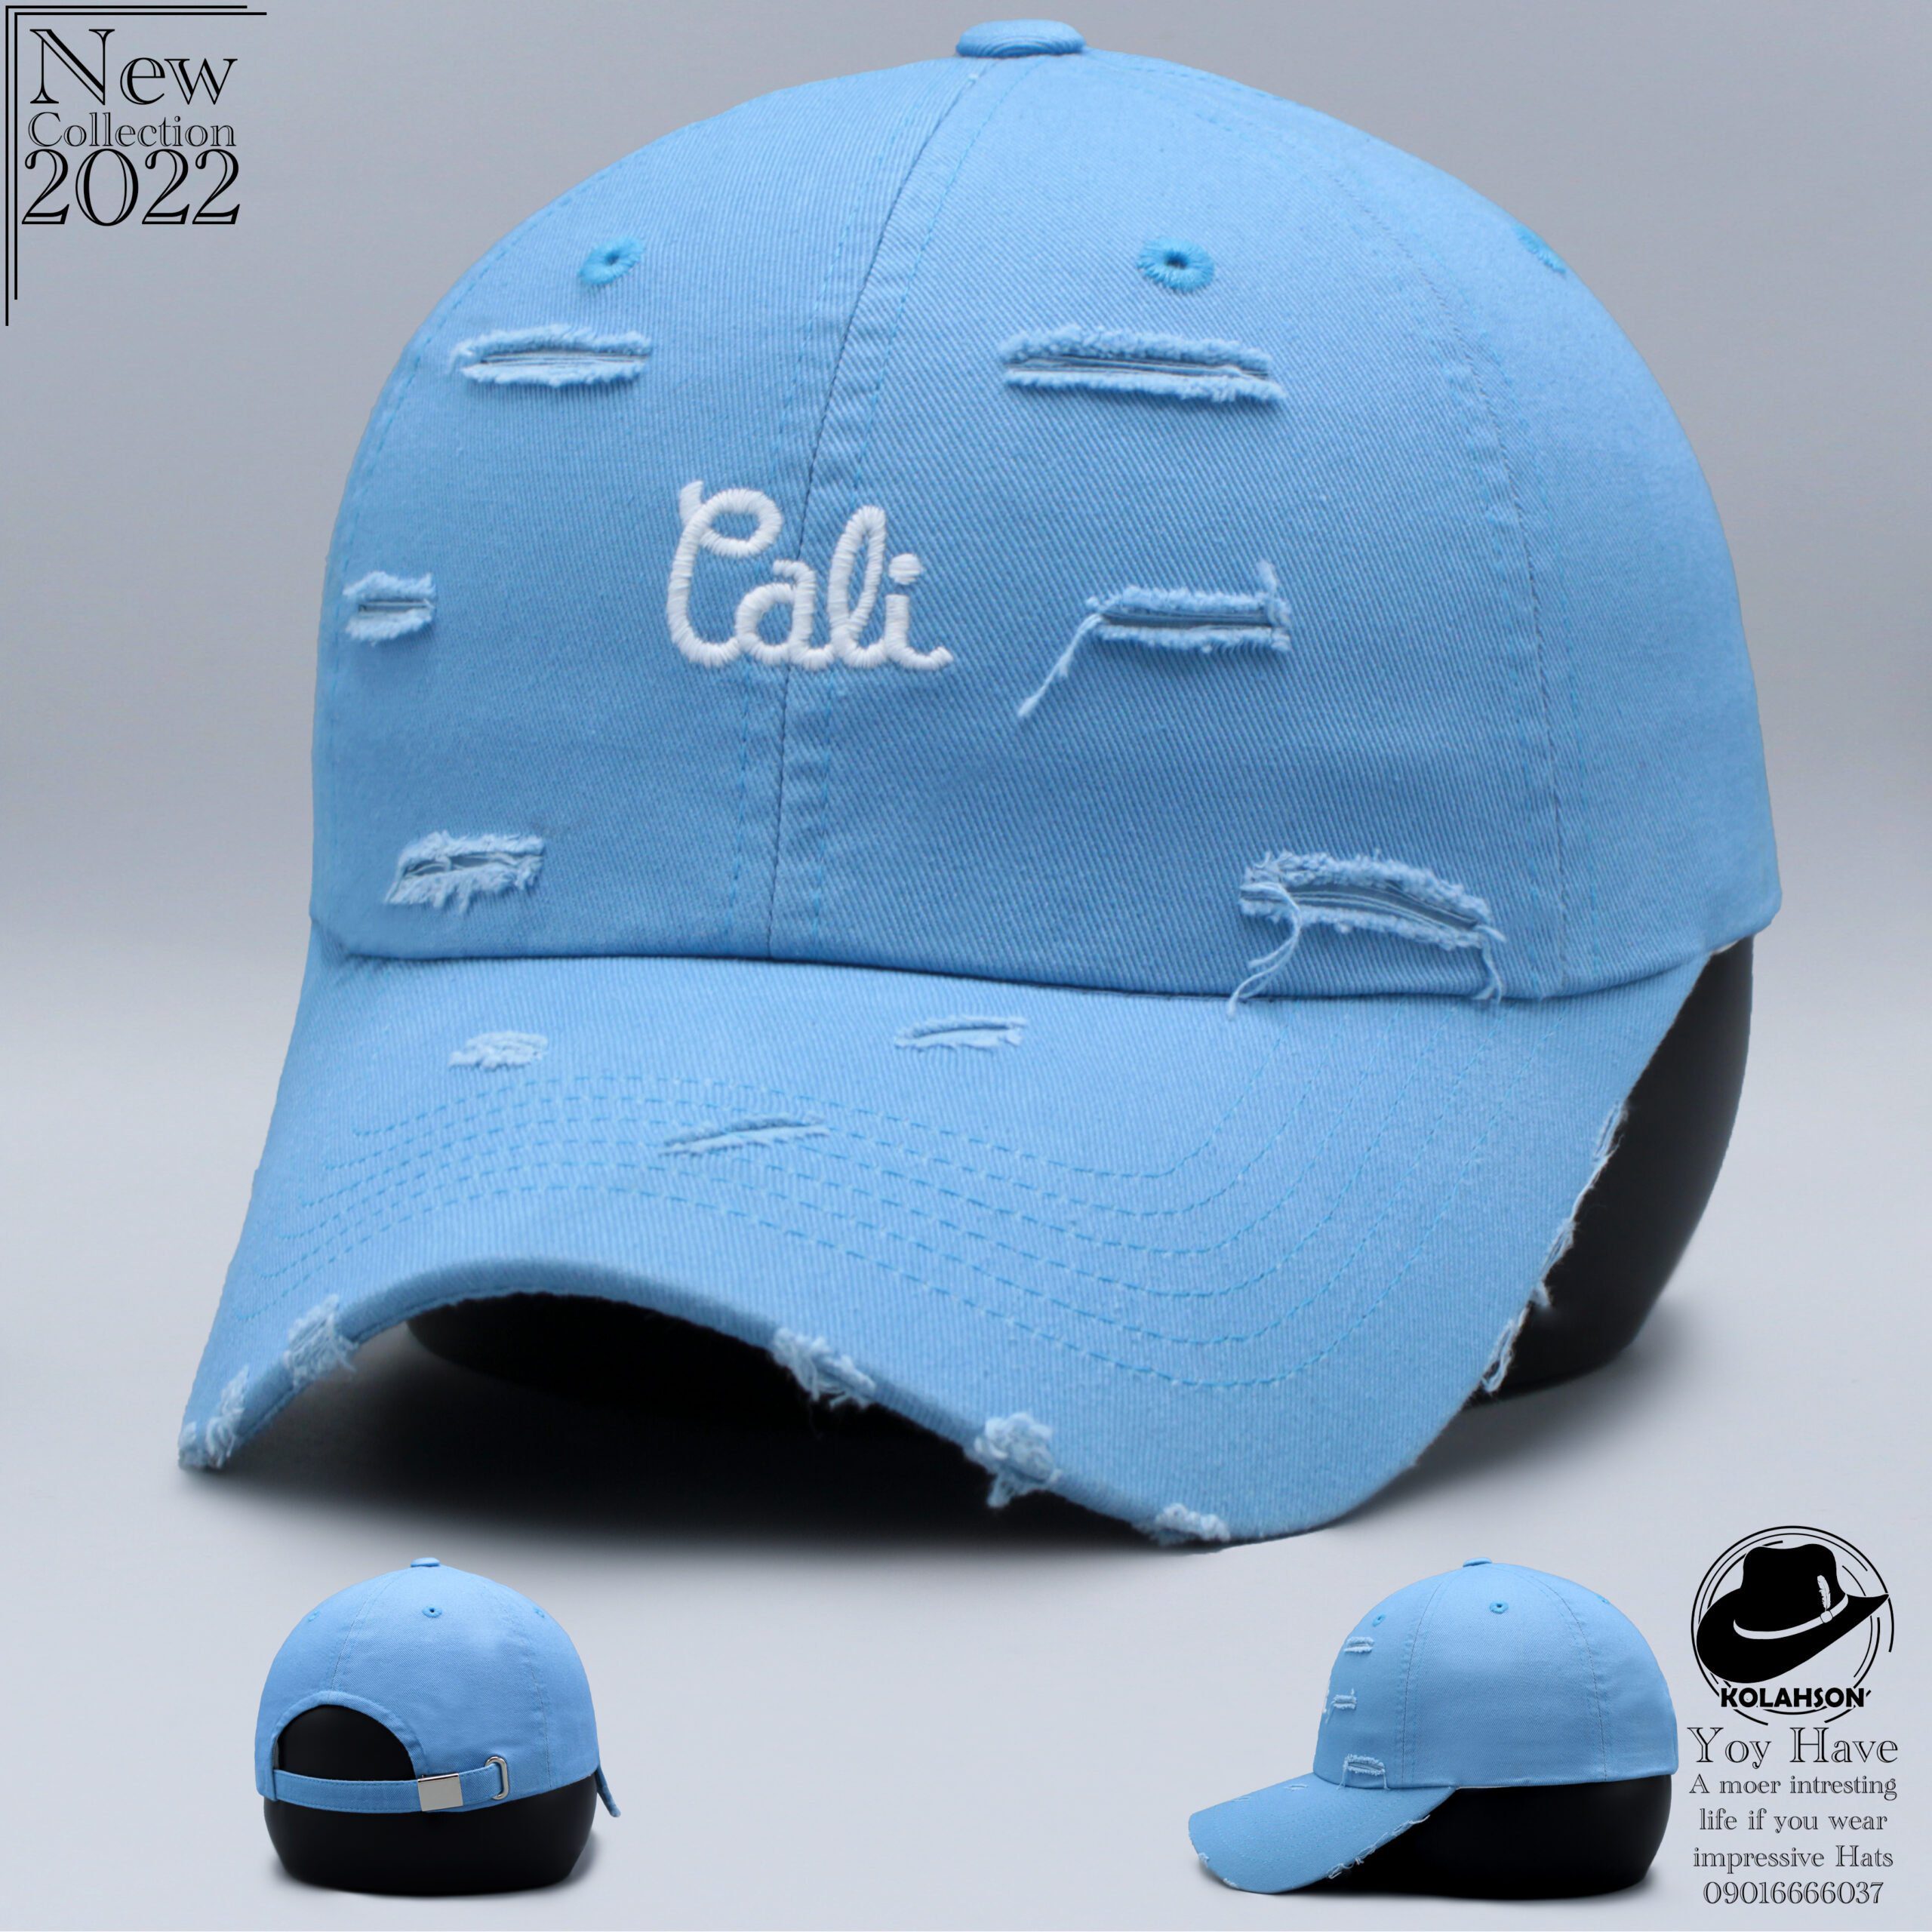 کلاه بزرگسال اسپرت بیسبالی کتان زاپ دار طرح جین طرح Eali رنگ آبی روشن کد KBEBKTJTERAR001 scaled